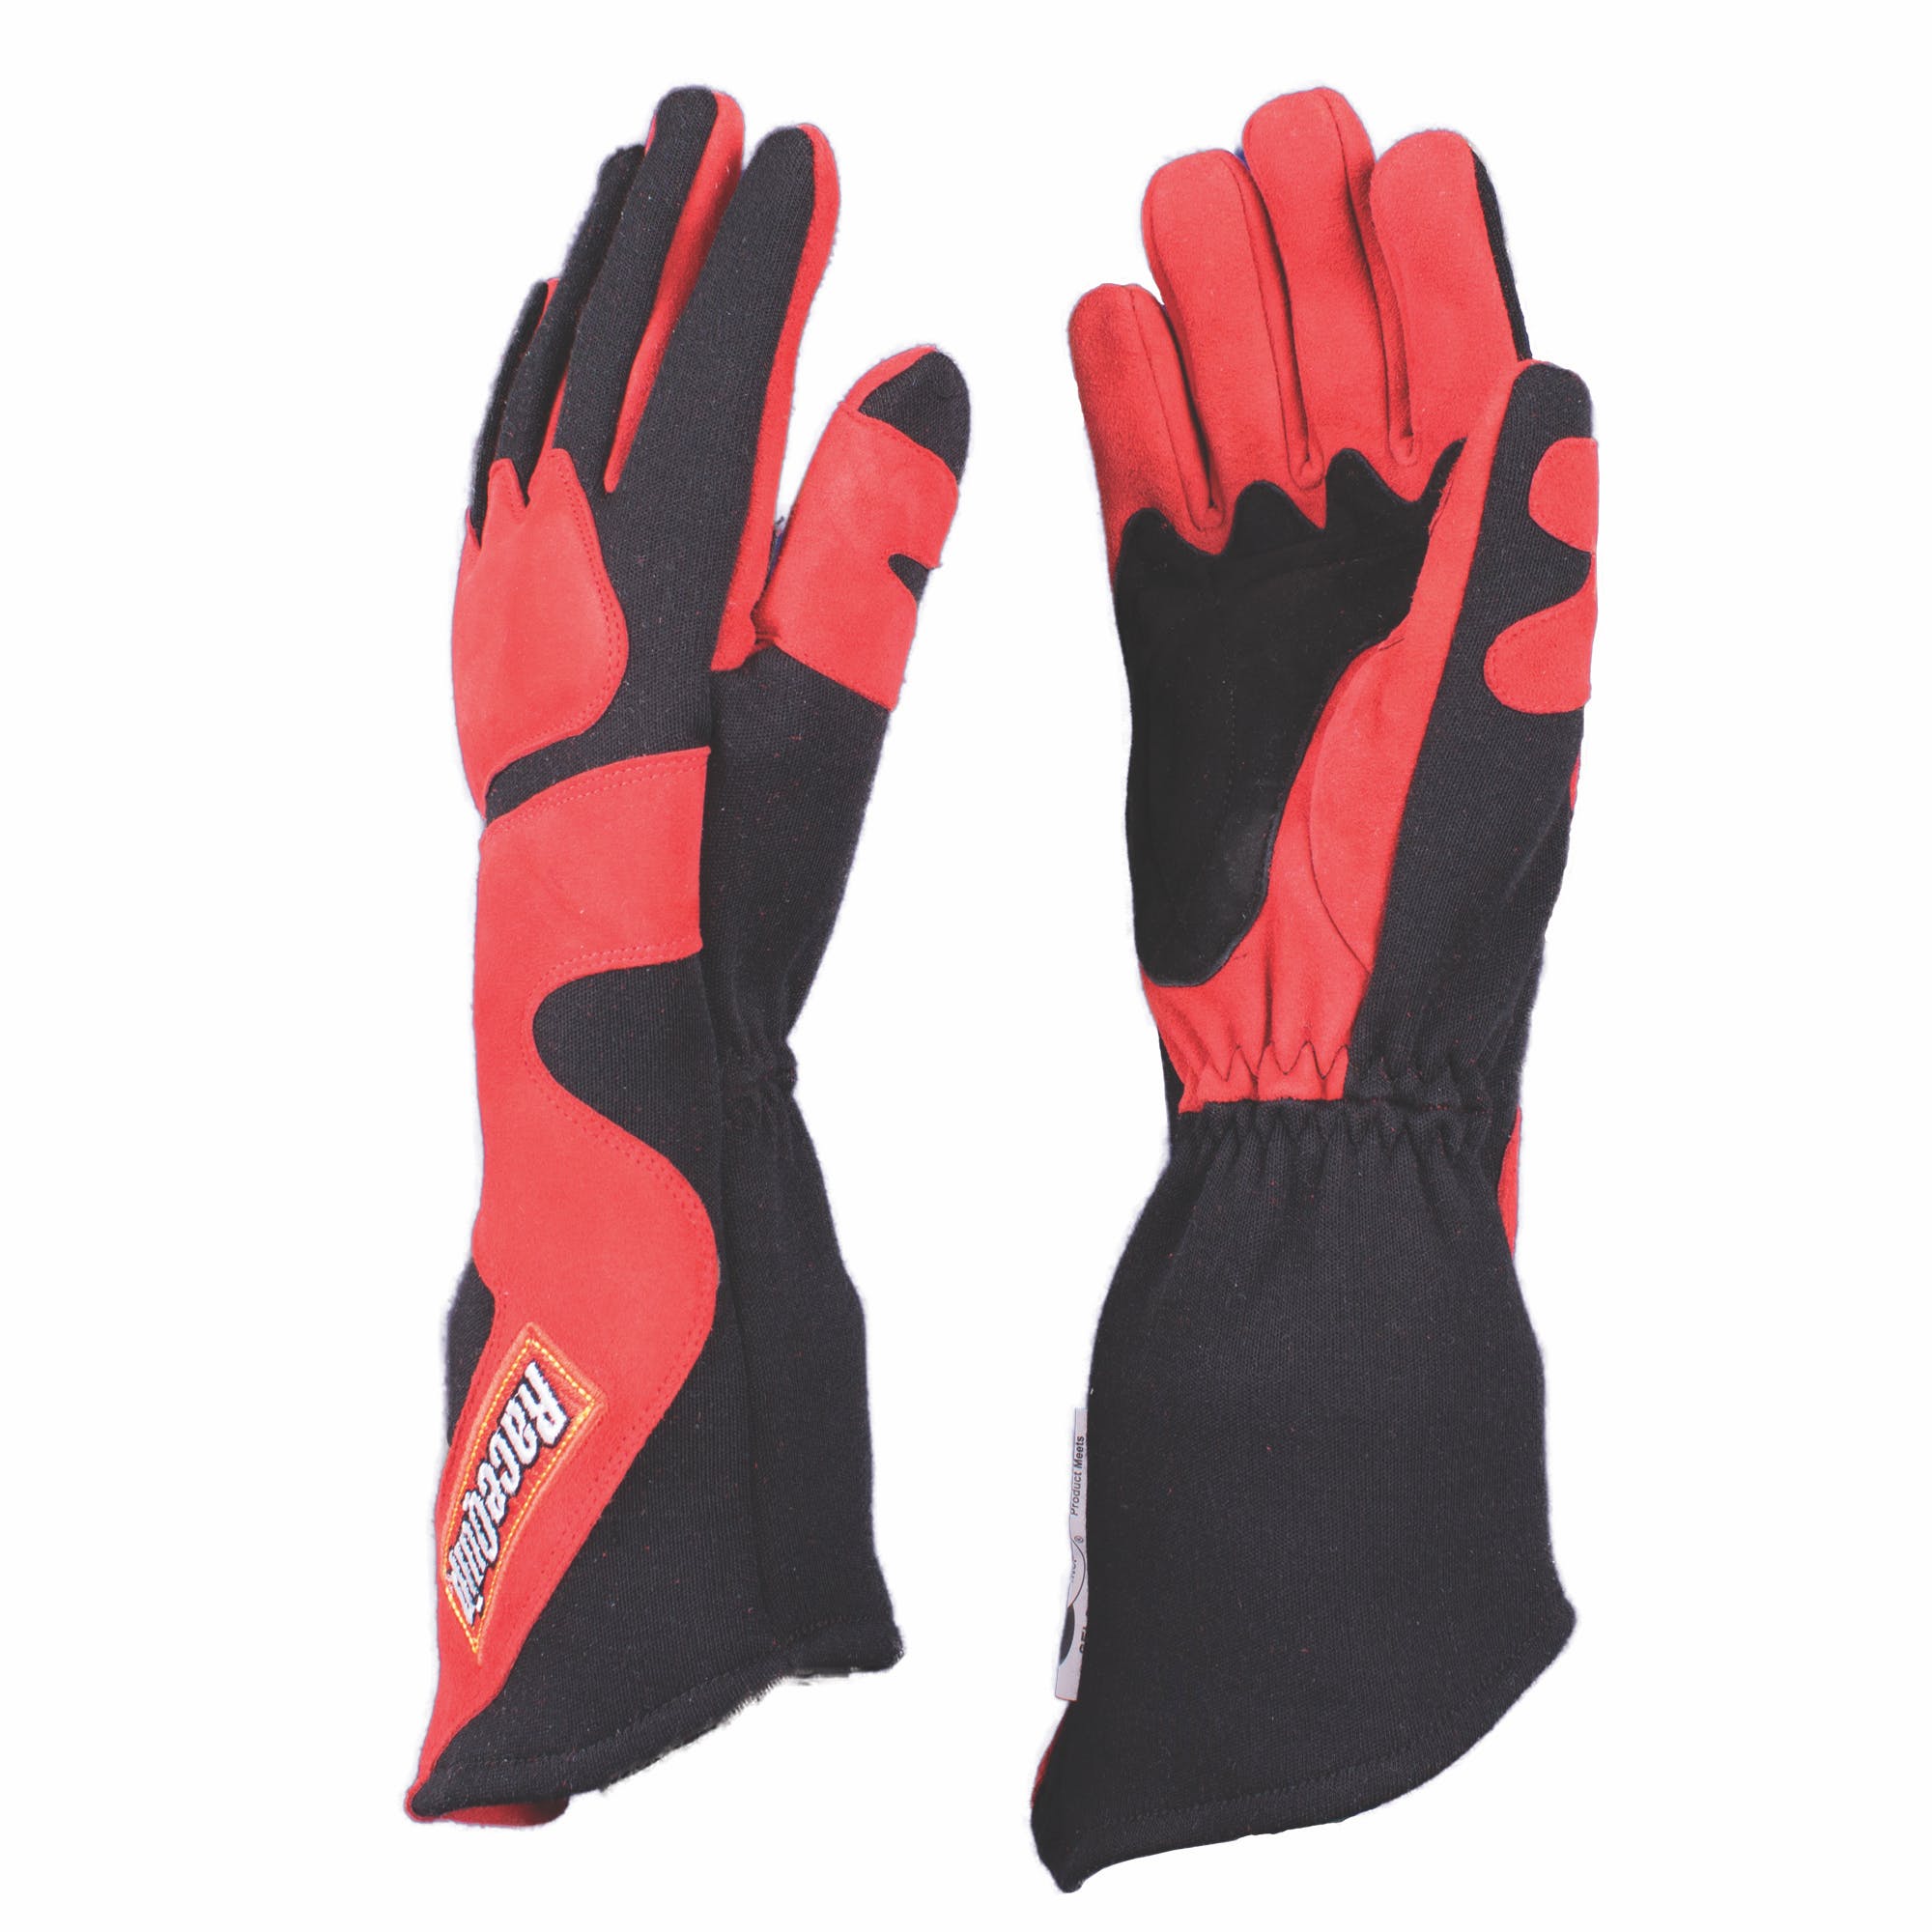 RaceQuip 358105 SFI-5 Angle-Cut Long Gauntlet Racing Gloves (Red/Black, Large)